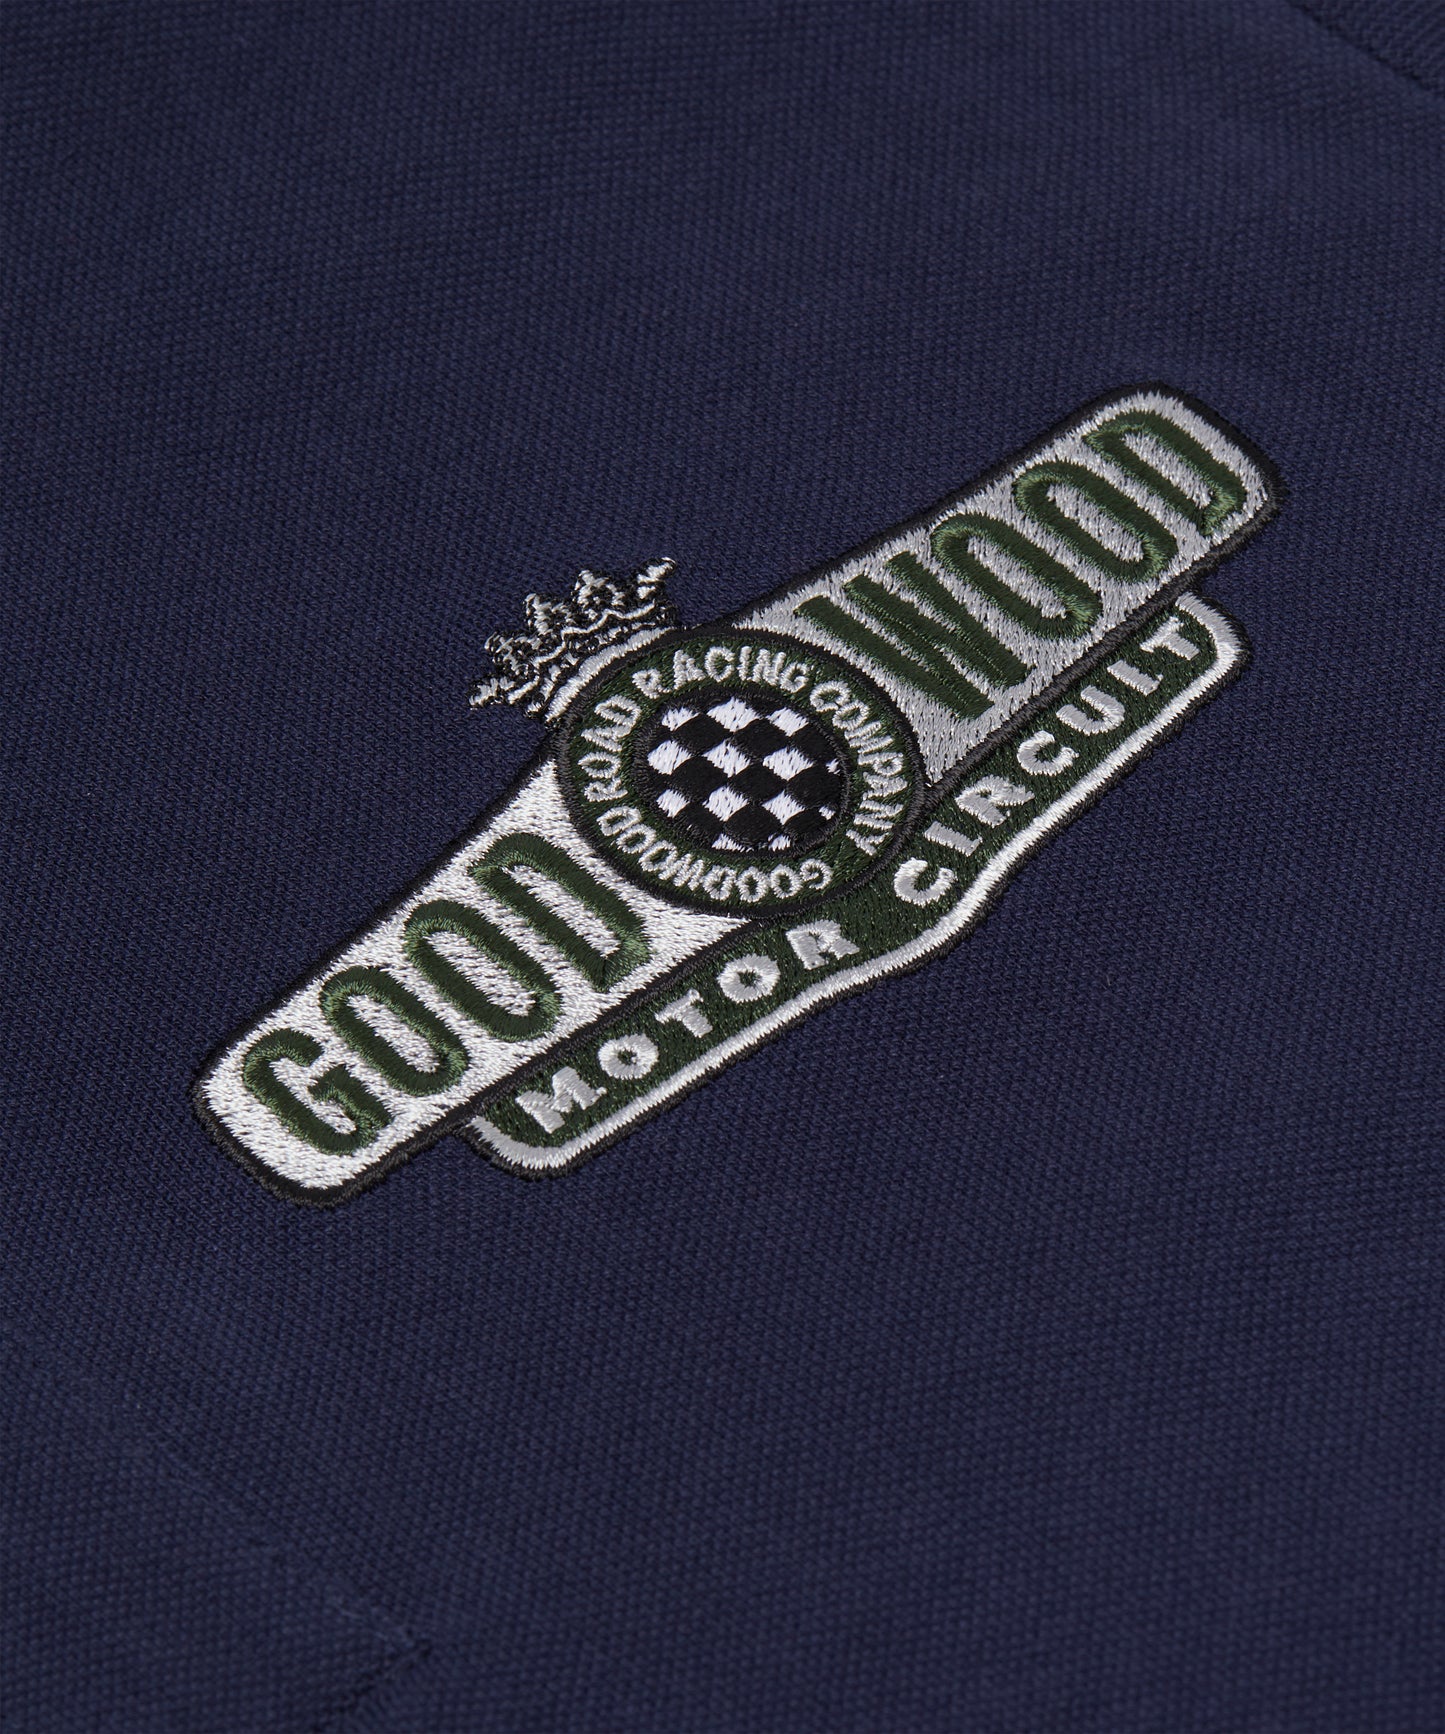 Goodwood Motor Circuit Polo Shirt